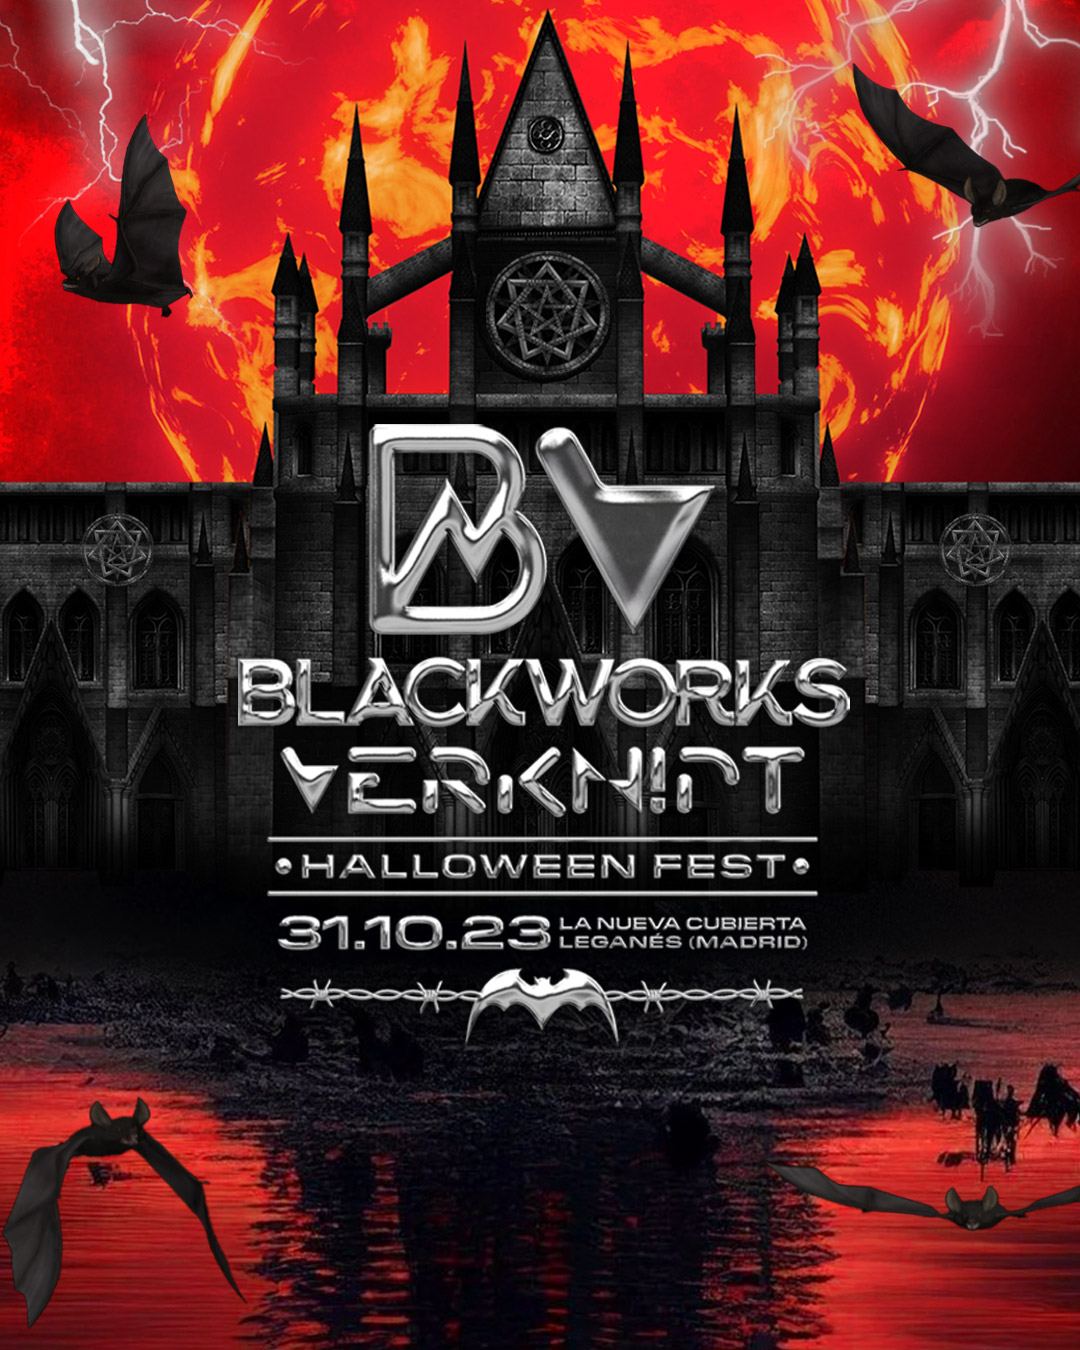 Blackworks x Verknipt Halloween Festival